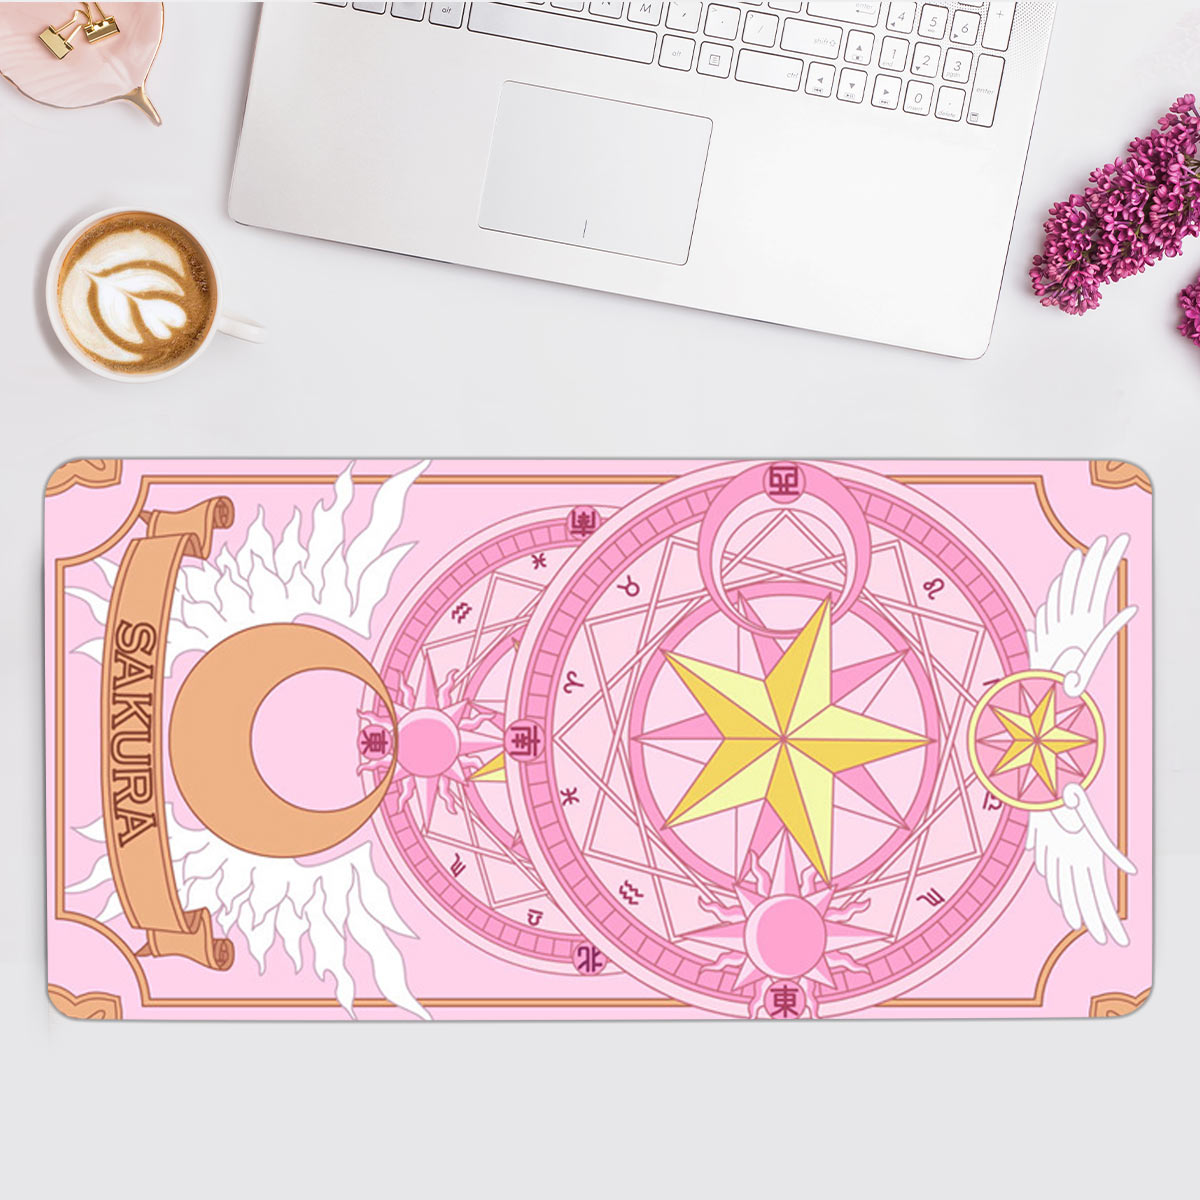 Sailor Moon Logo Desk Pad(3 patterns)